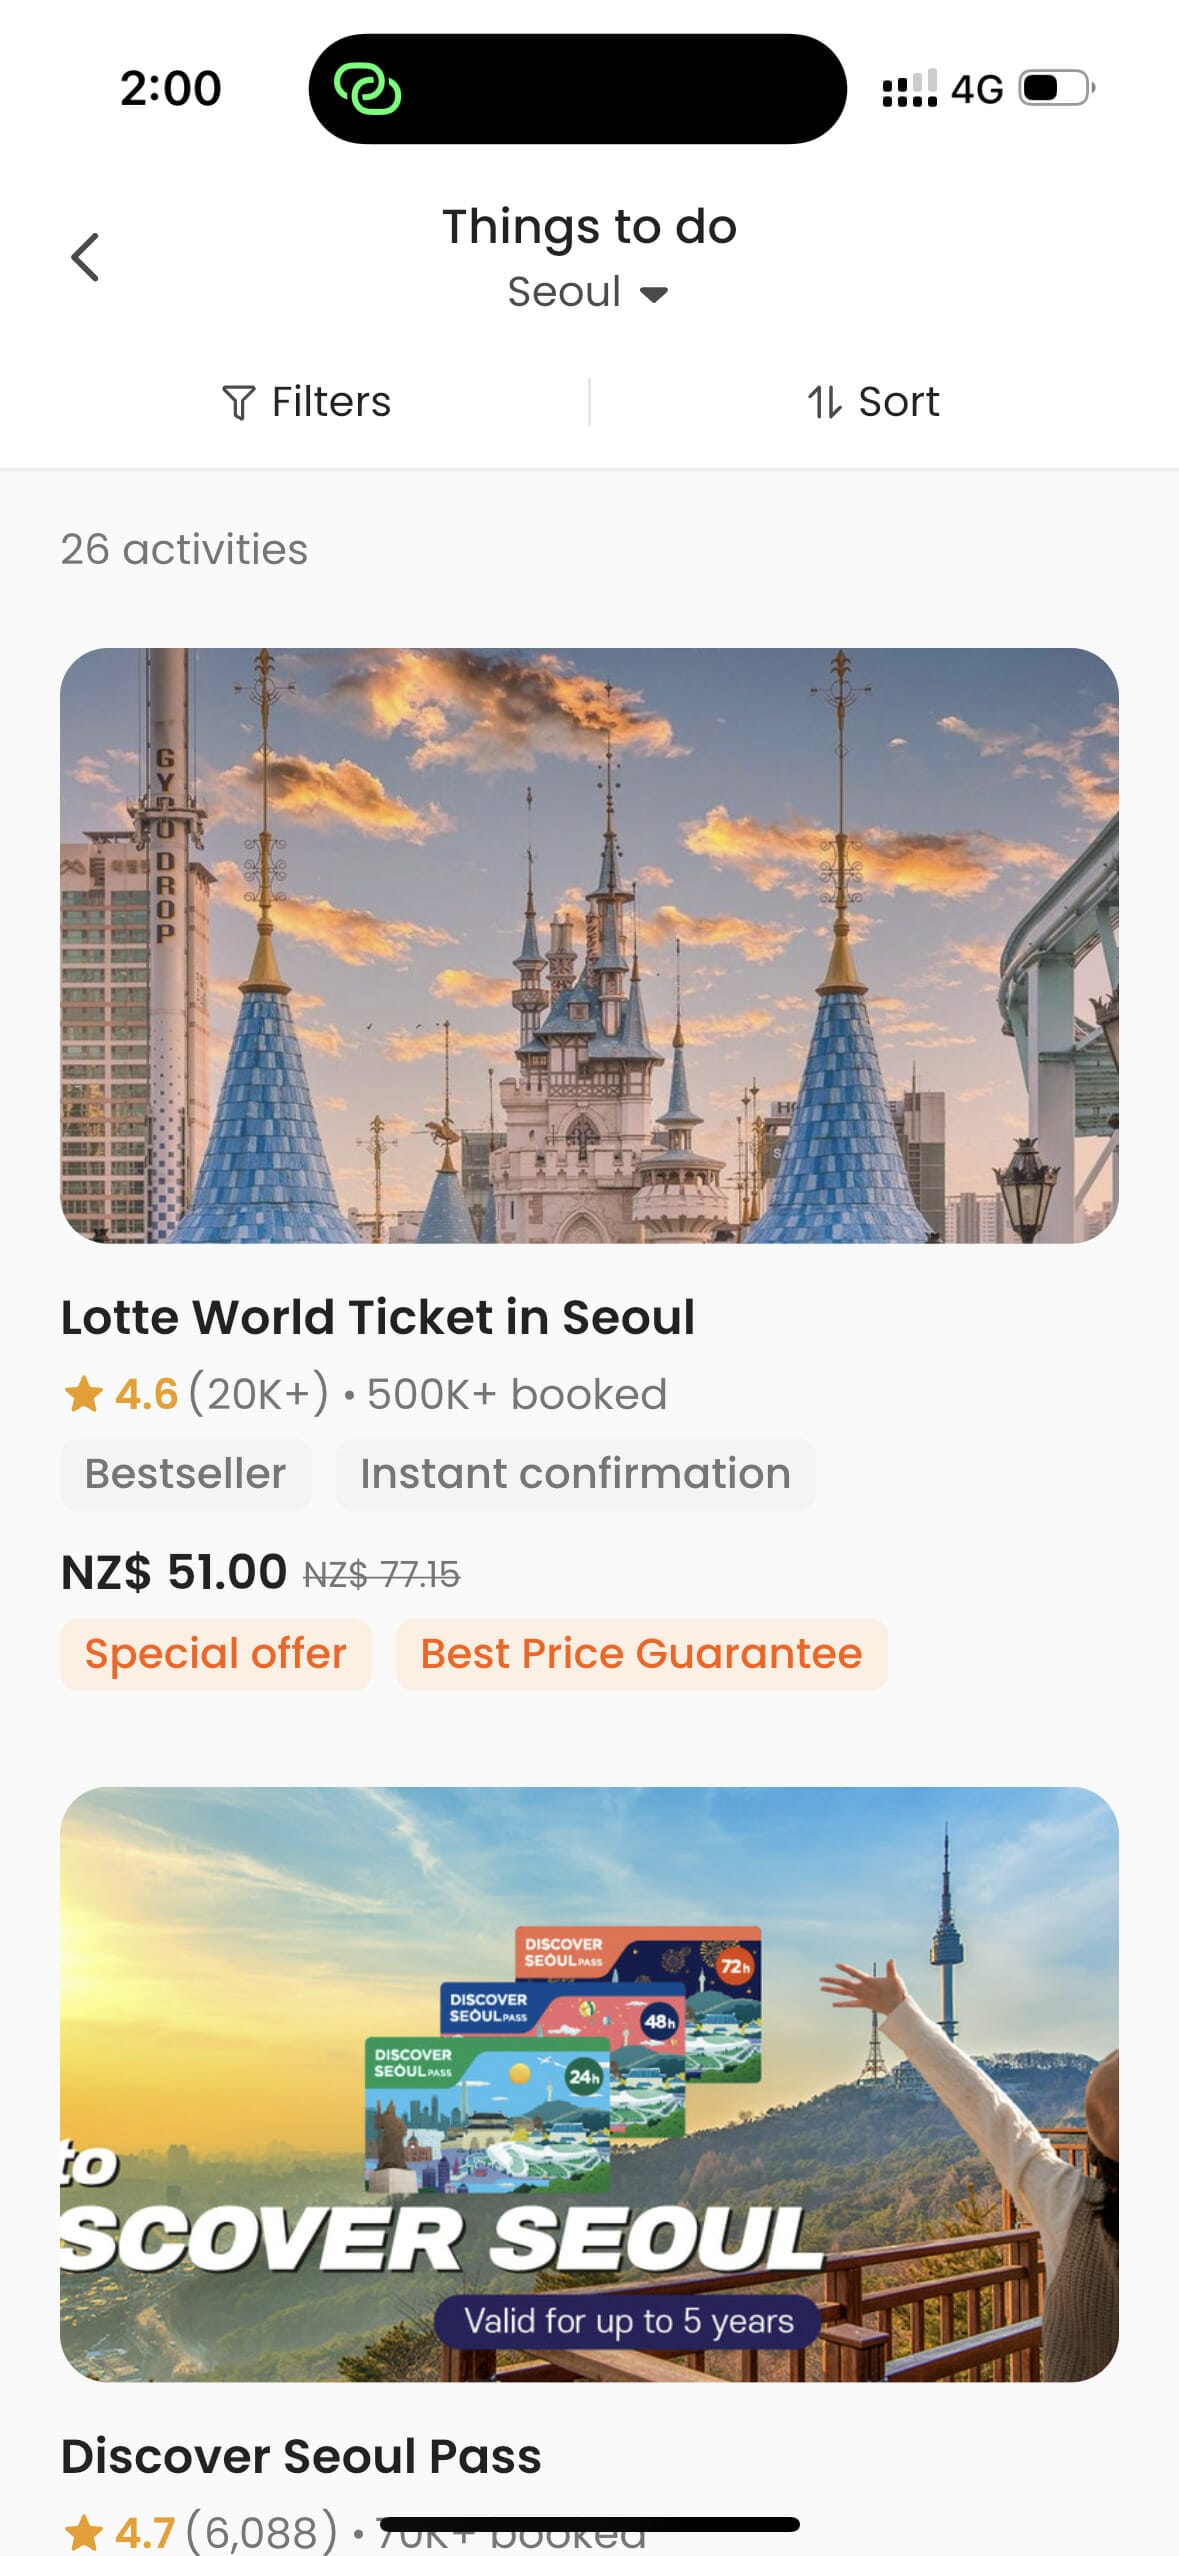 13 Best Korean Travel Apps - Prepare for Your Korea Trip 23